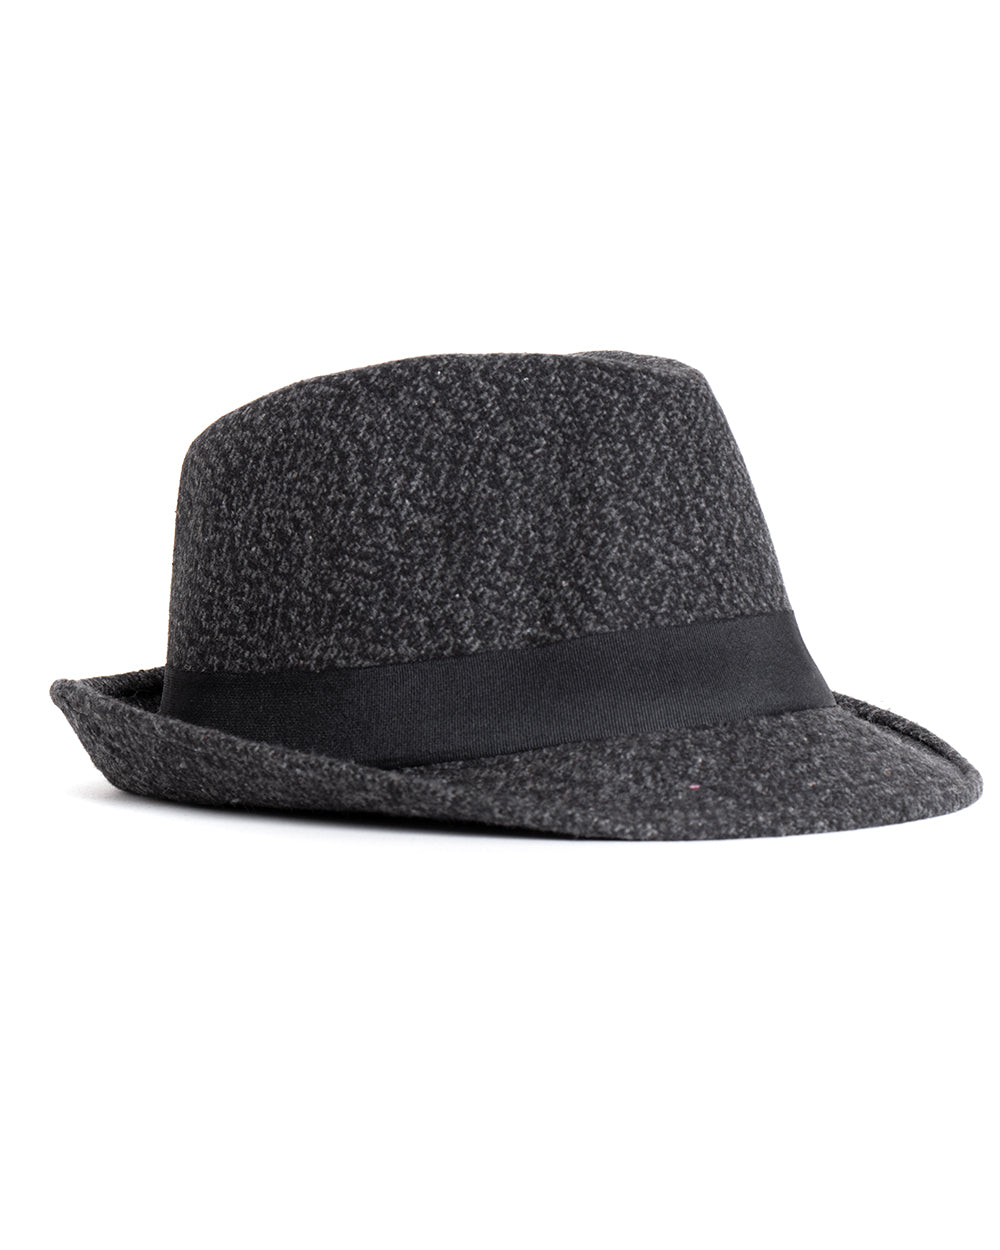 Cappello Uomo Rigido Nero Hat Casual Elegante Microfantasia GIOSAL-CAP1005A